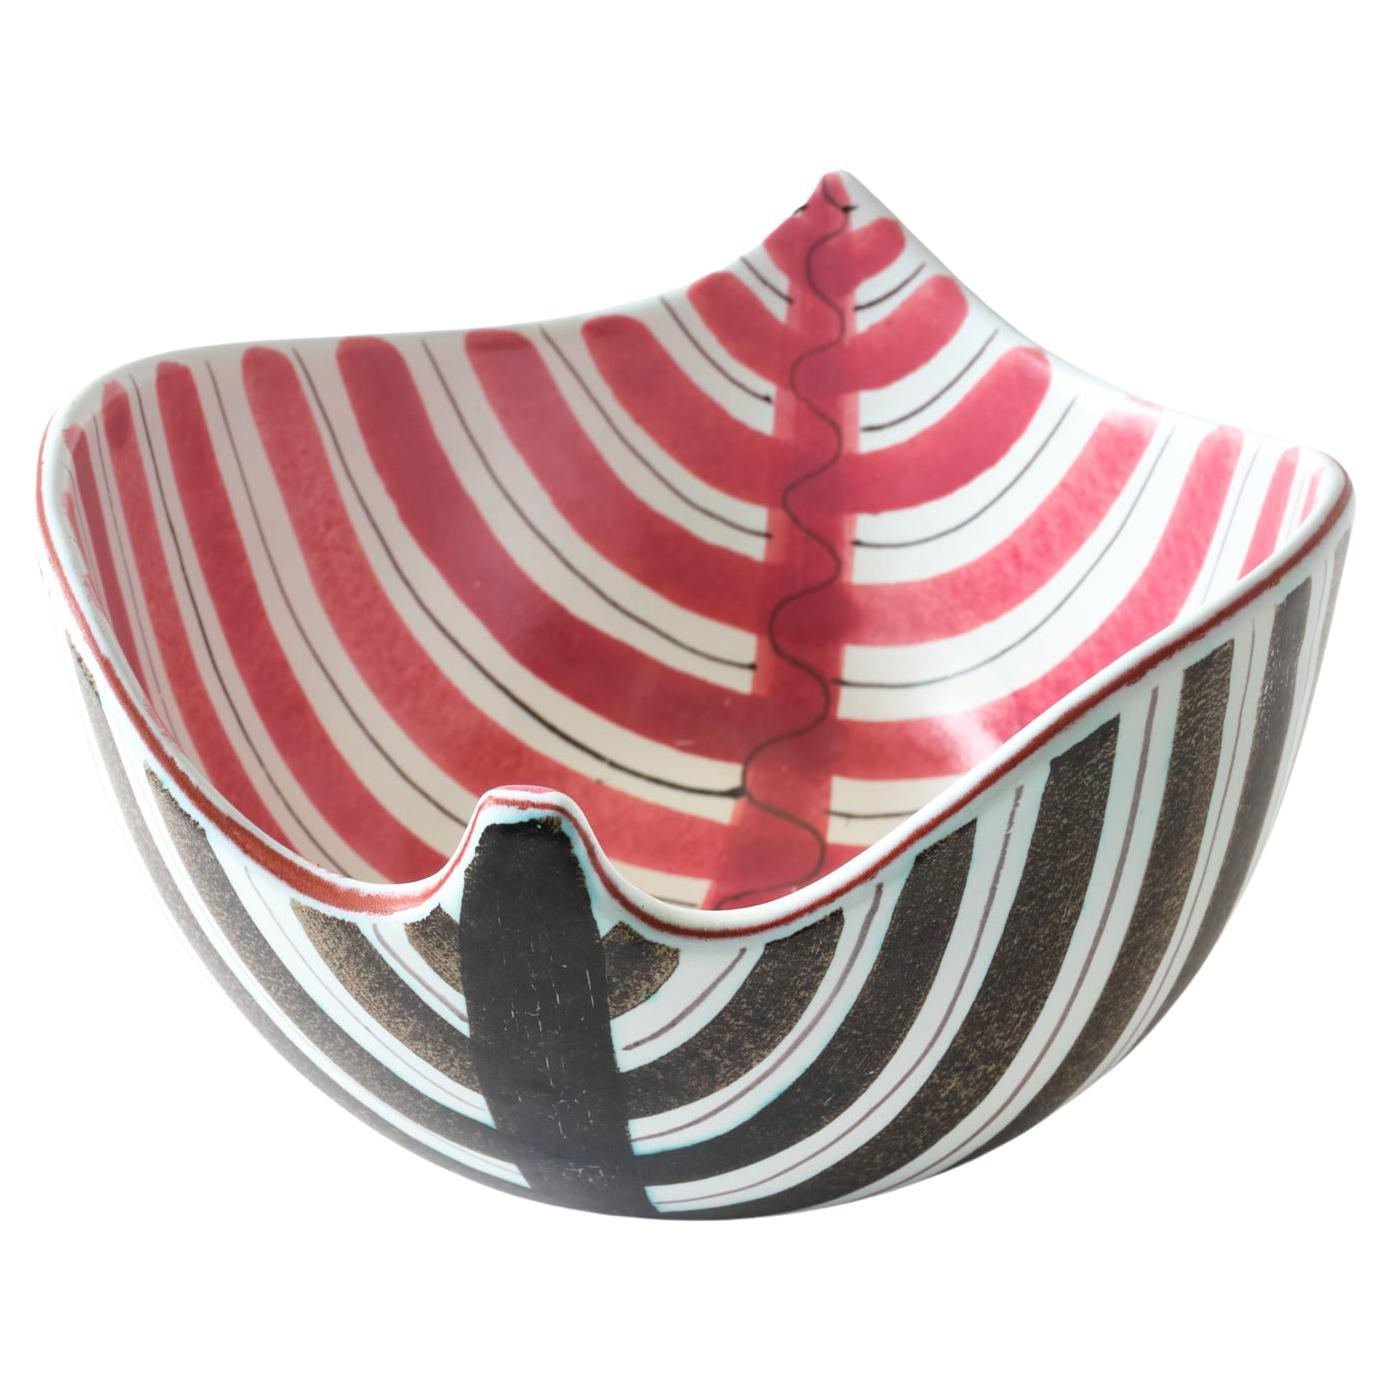 Ceramic Bowl by Stig Lindberg, Sweden, Red, Brown & White Striped, C 1950